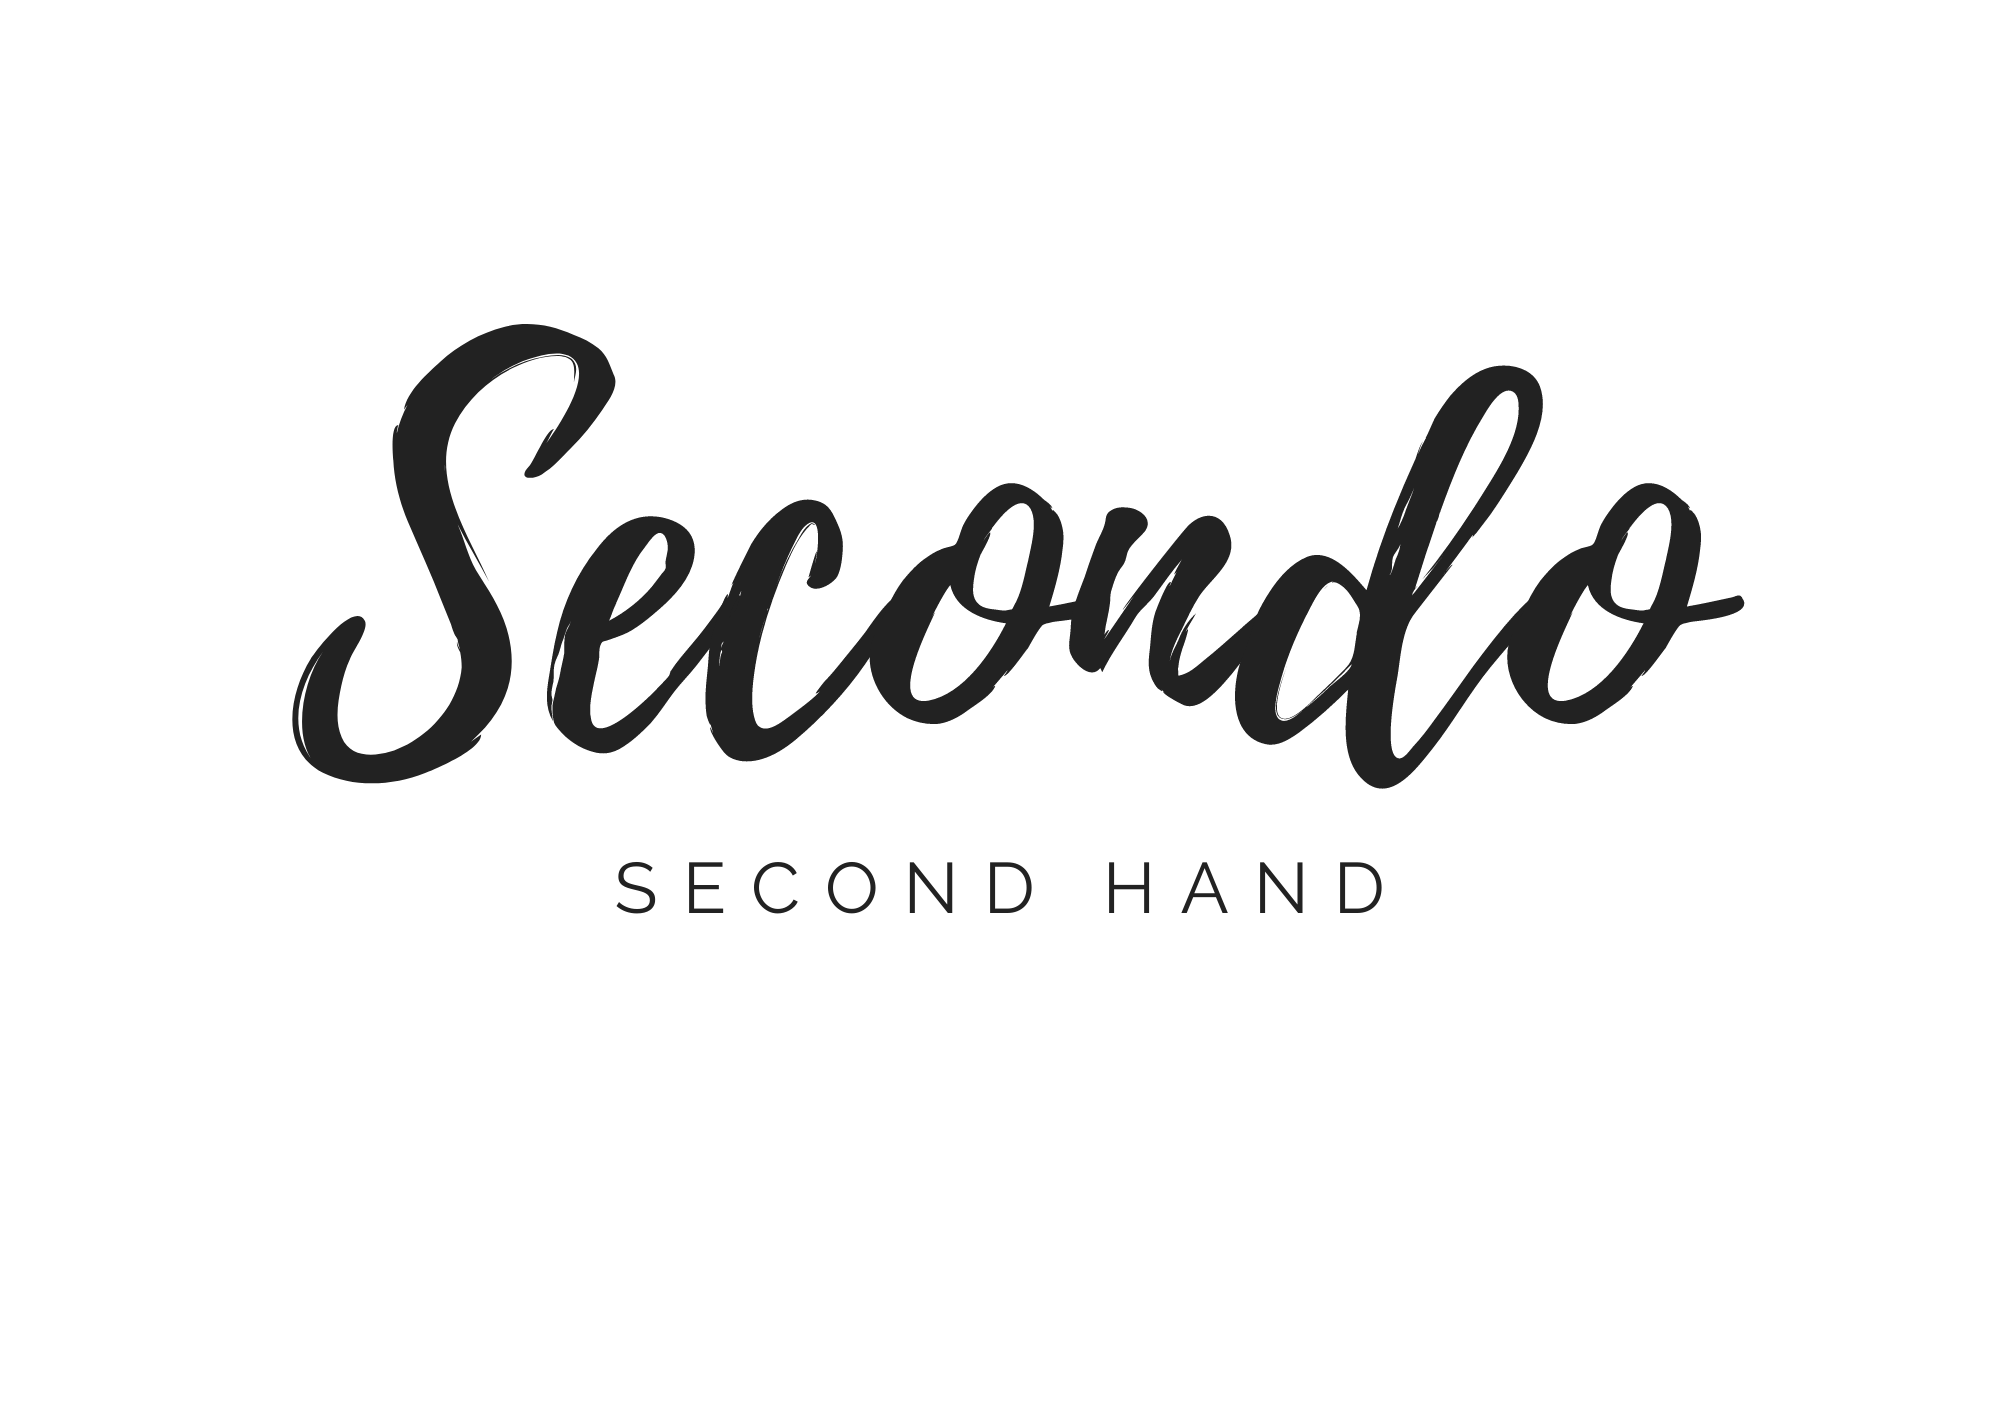 second hand